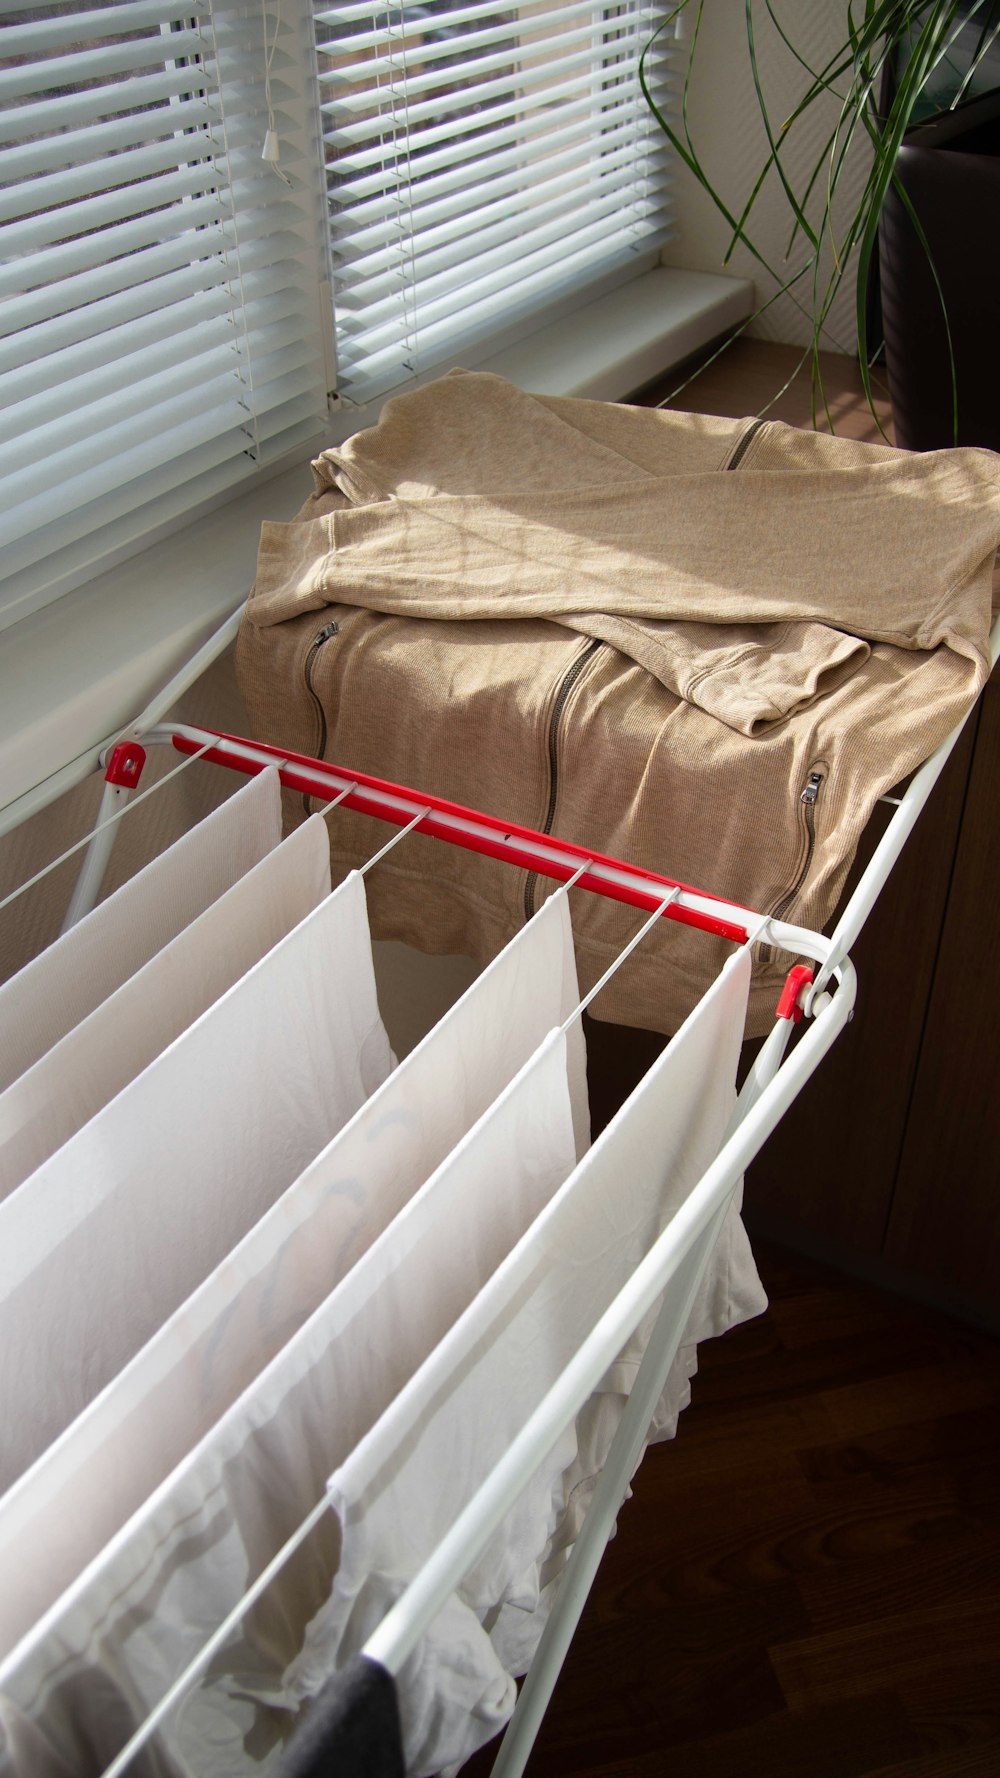 brown textile on white plastic clothes hanger